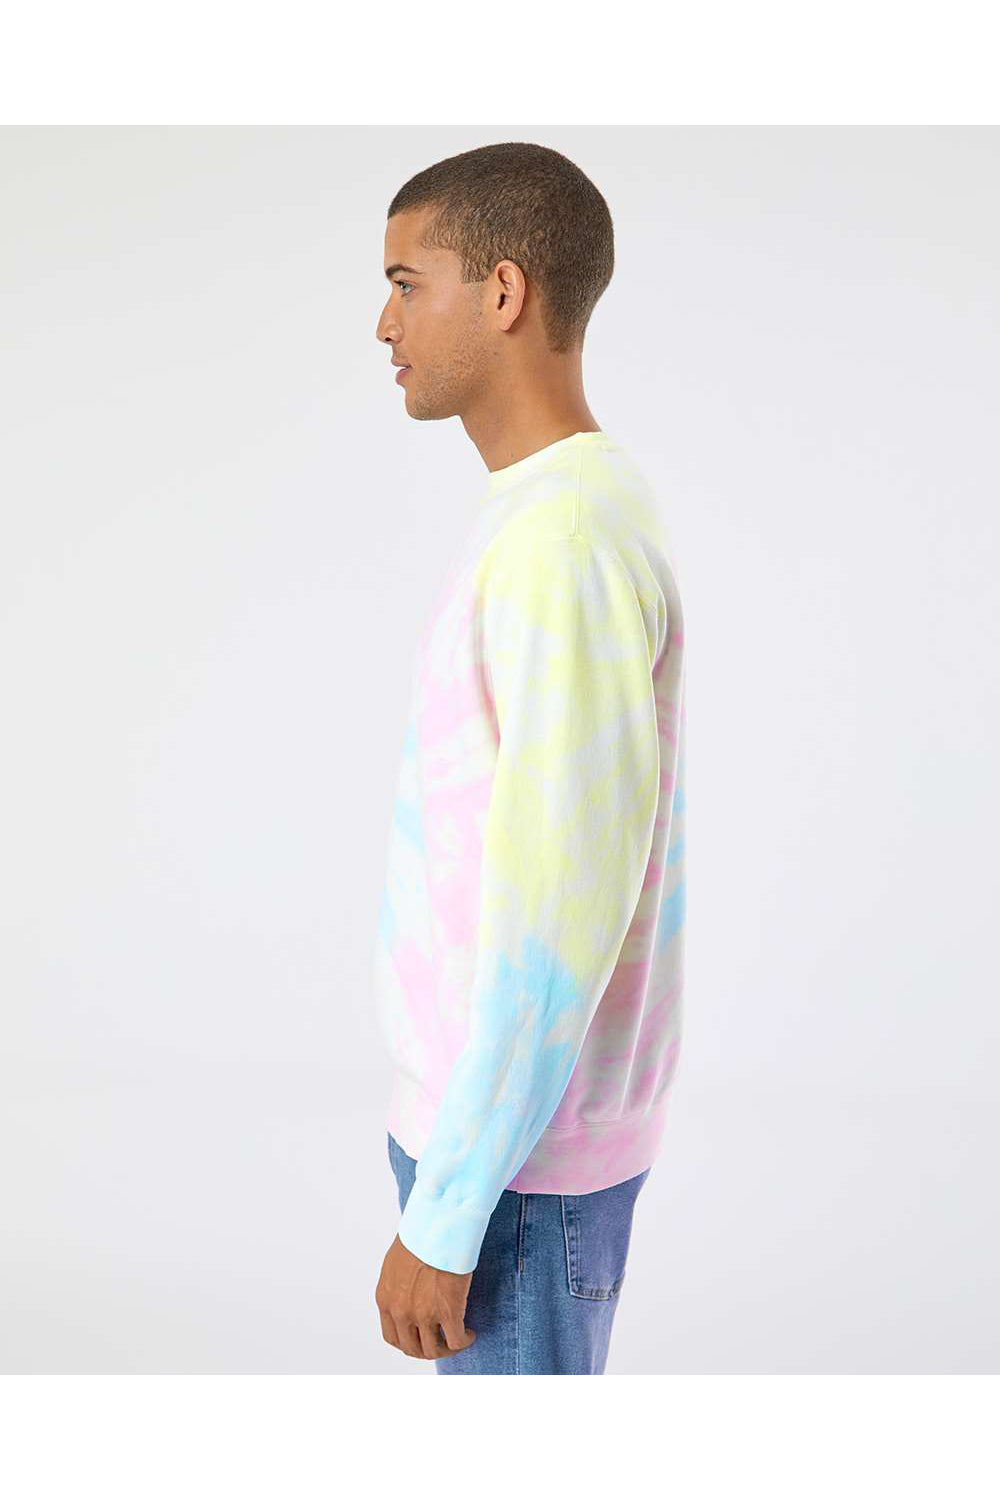 Independent Trading Co. PRM3500TD Mens Tie-Dye Crewneck Sweatshirt Sunset Swirl Model Side